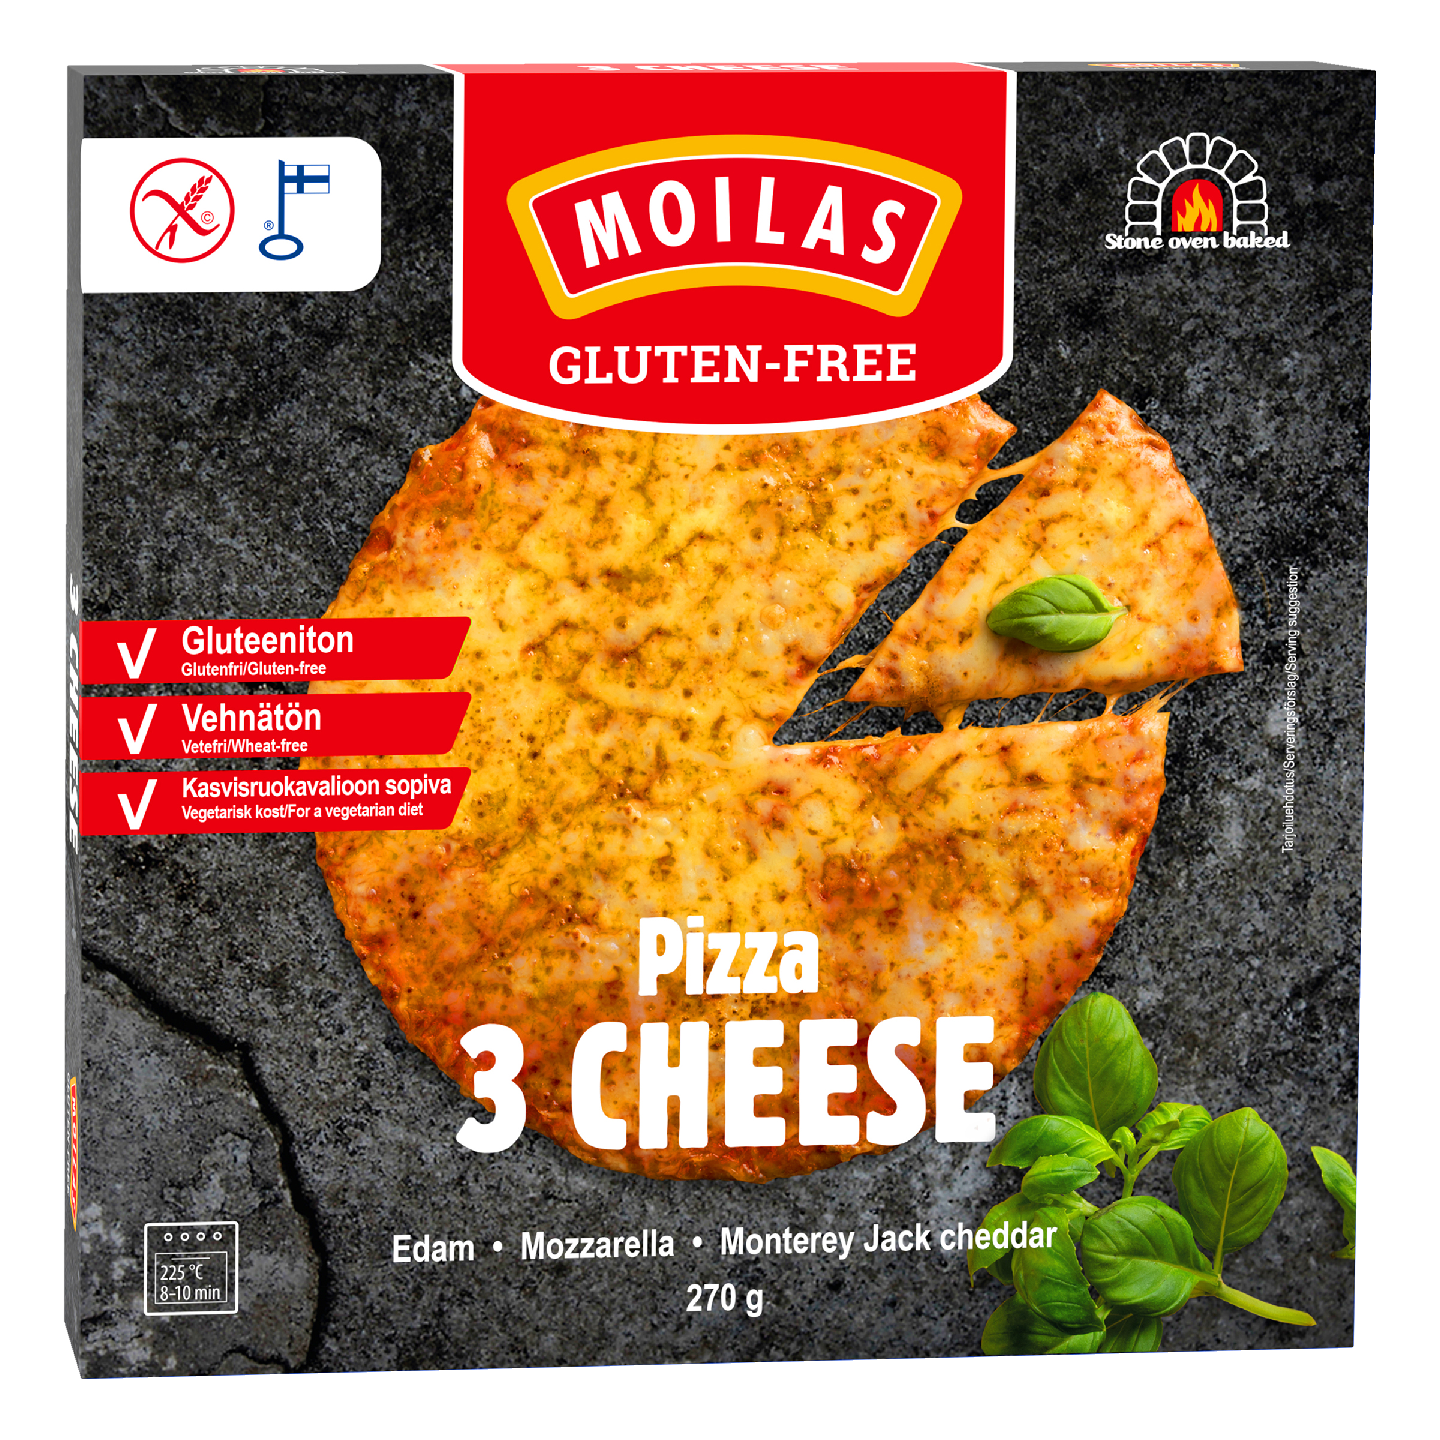 Moilas Gluten-Free 3 Cheese pizza 270g gluteeniton pakaste